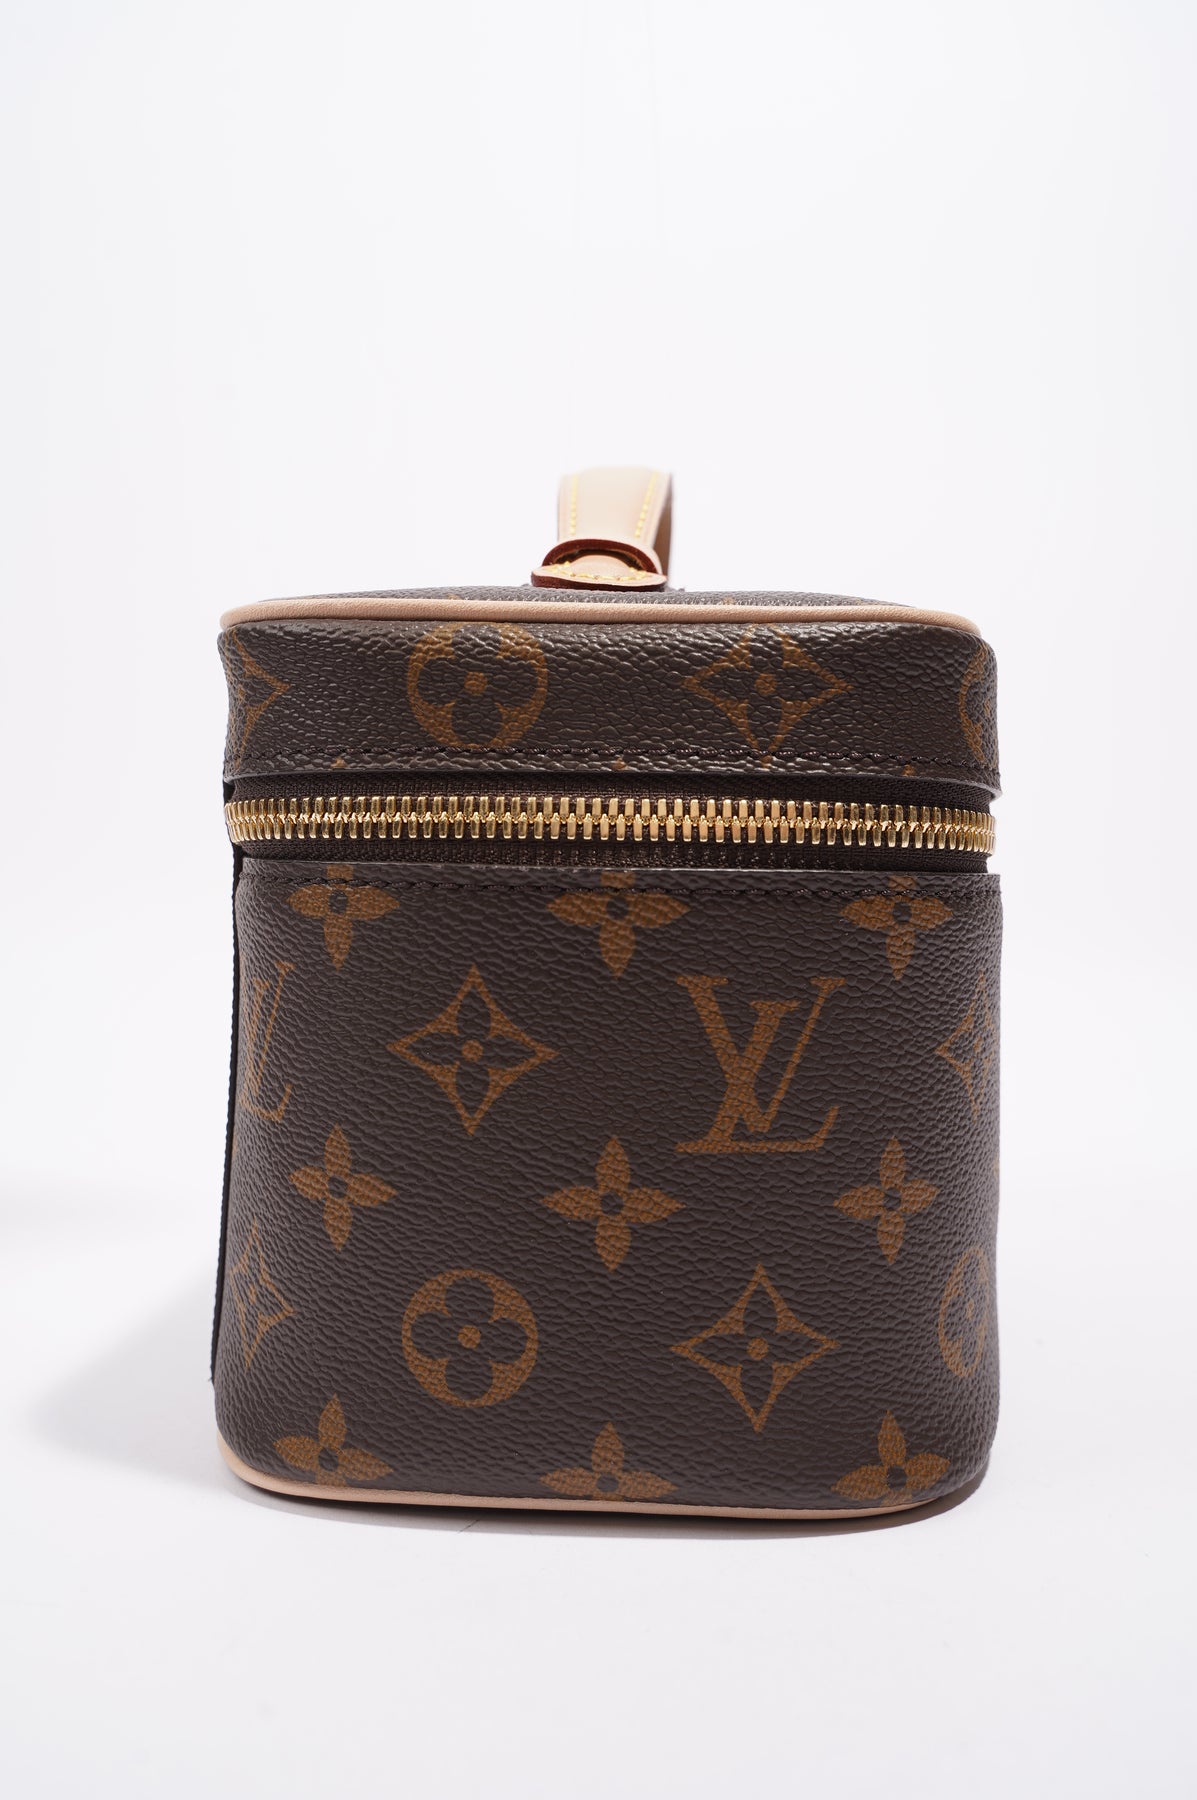 Louis Vuitton Nice Vanity Case